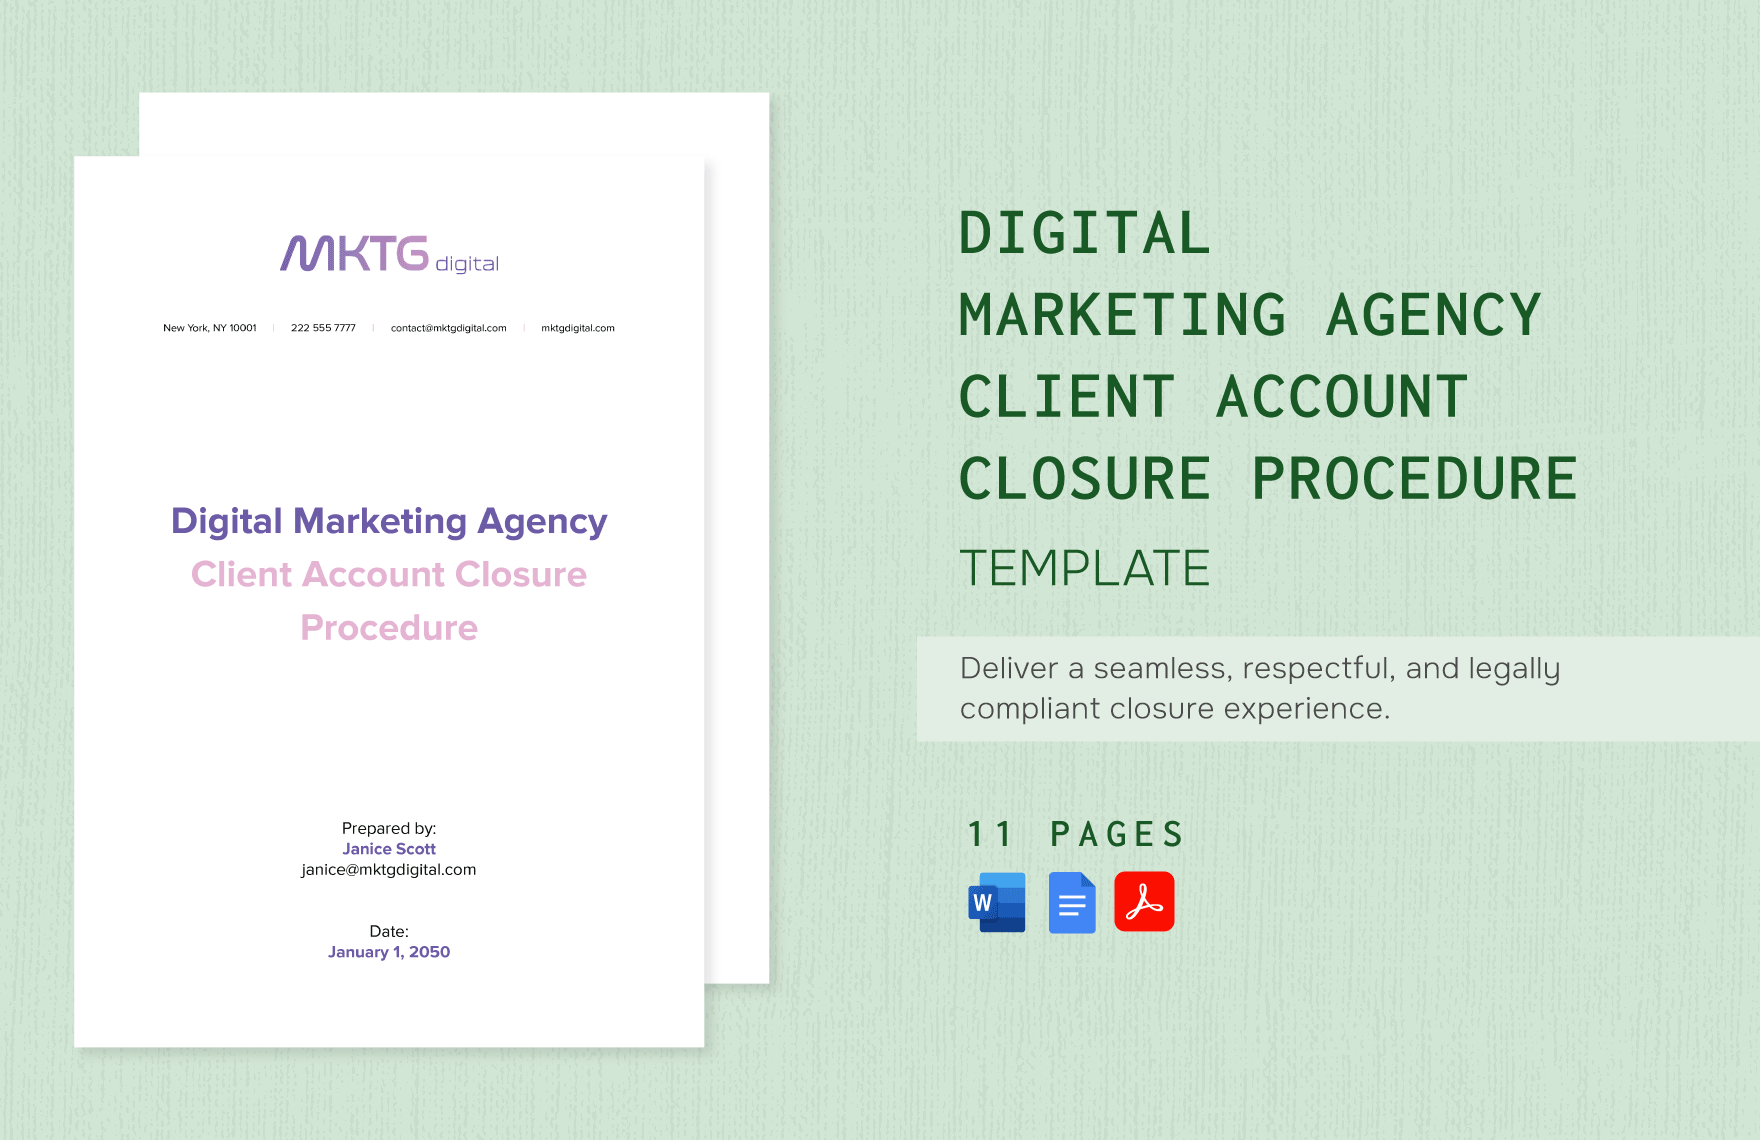 Digital Marketing Agency Client Account Closure Procedure Template